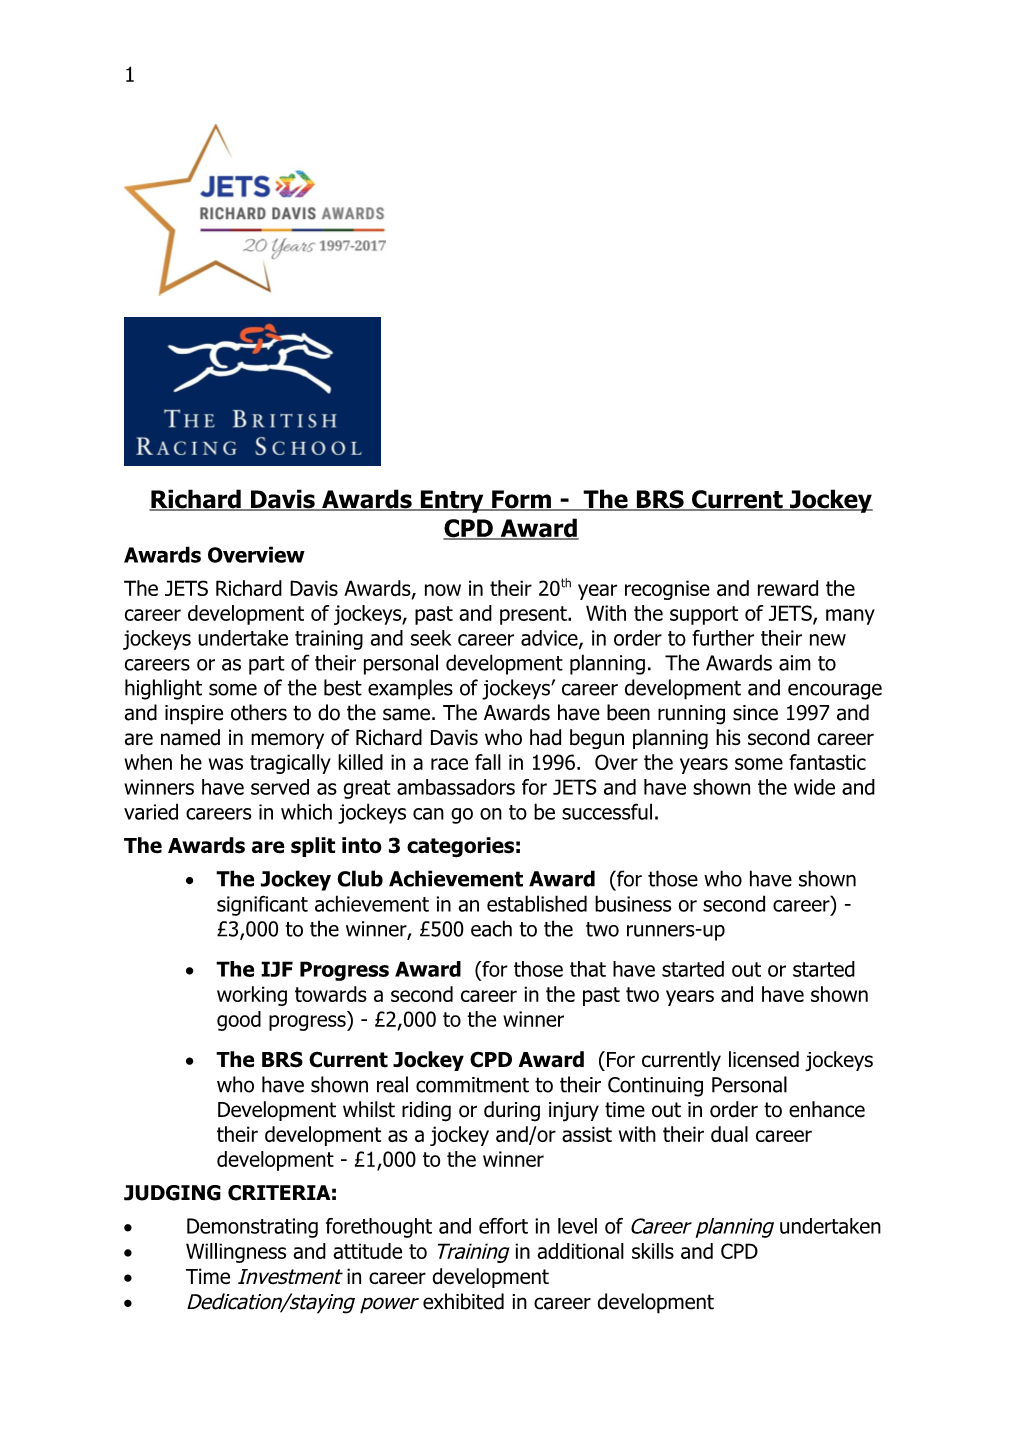 Richard Davis Awards Entry Form - the BRS Current Jockey CPD Award